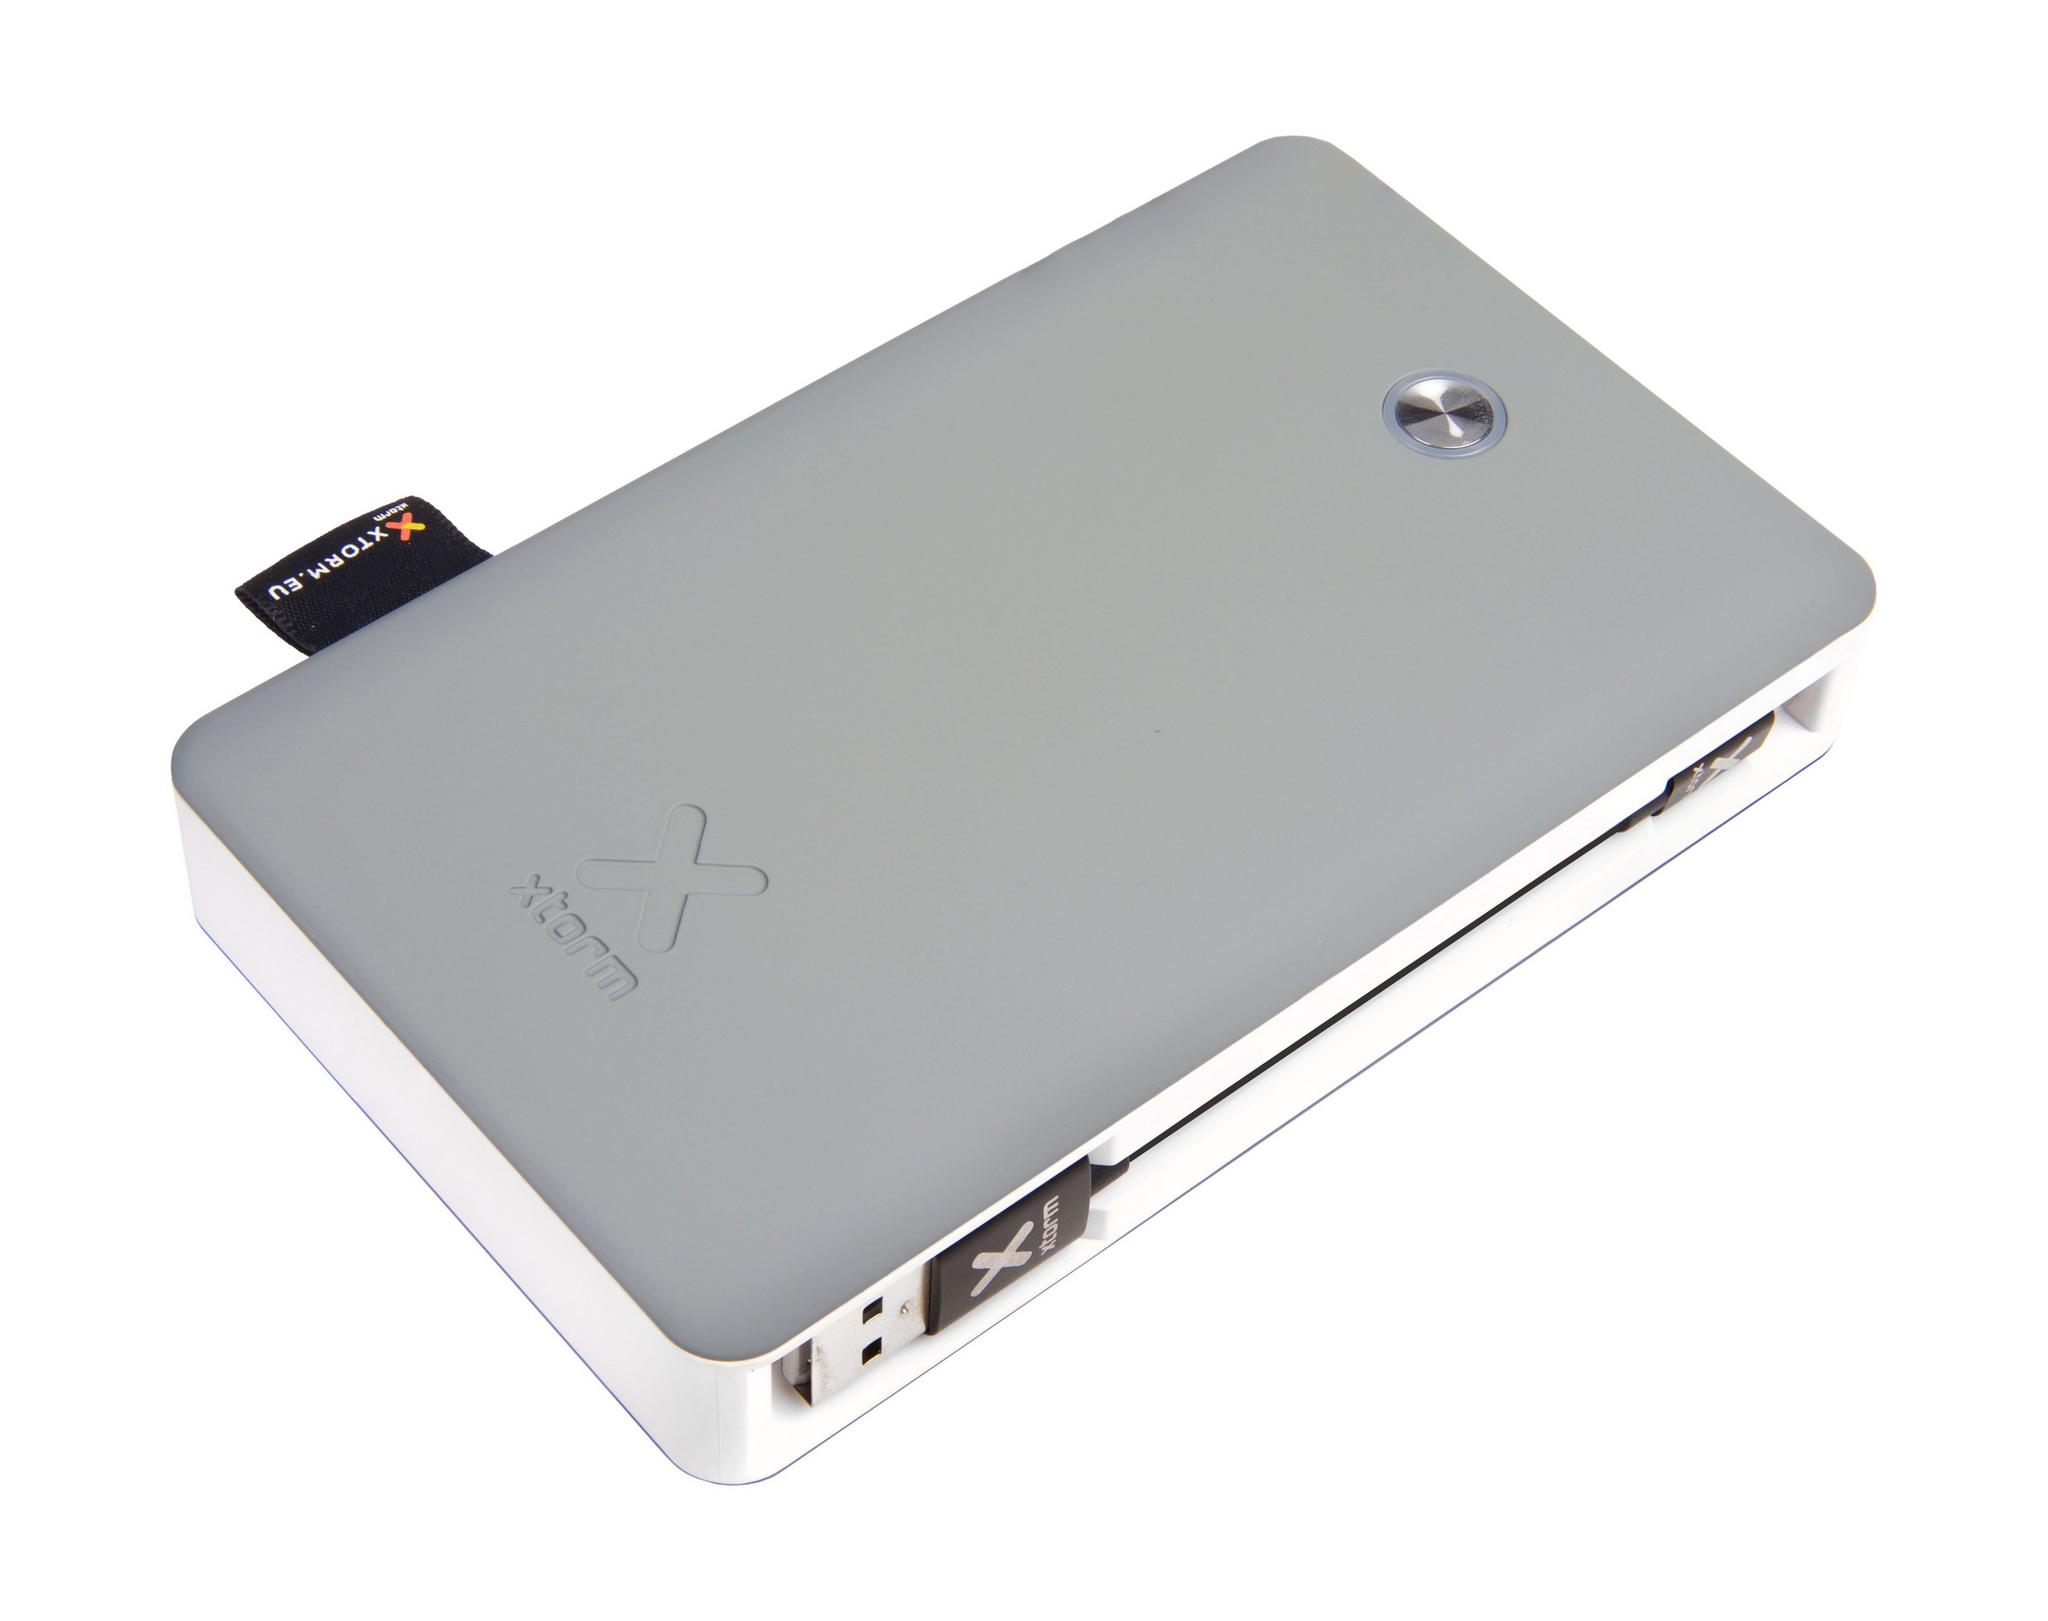 Xtorm Explore 10000 mAh Powerbank (XB201) - Silver